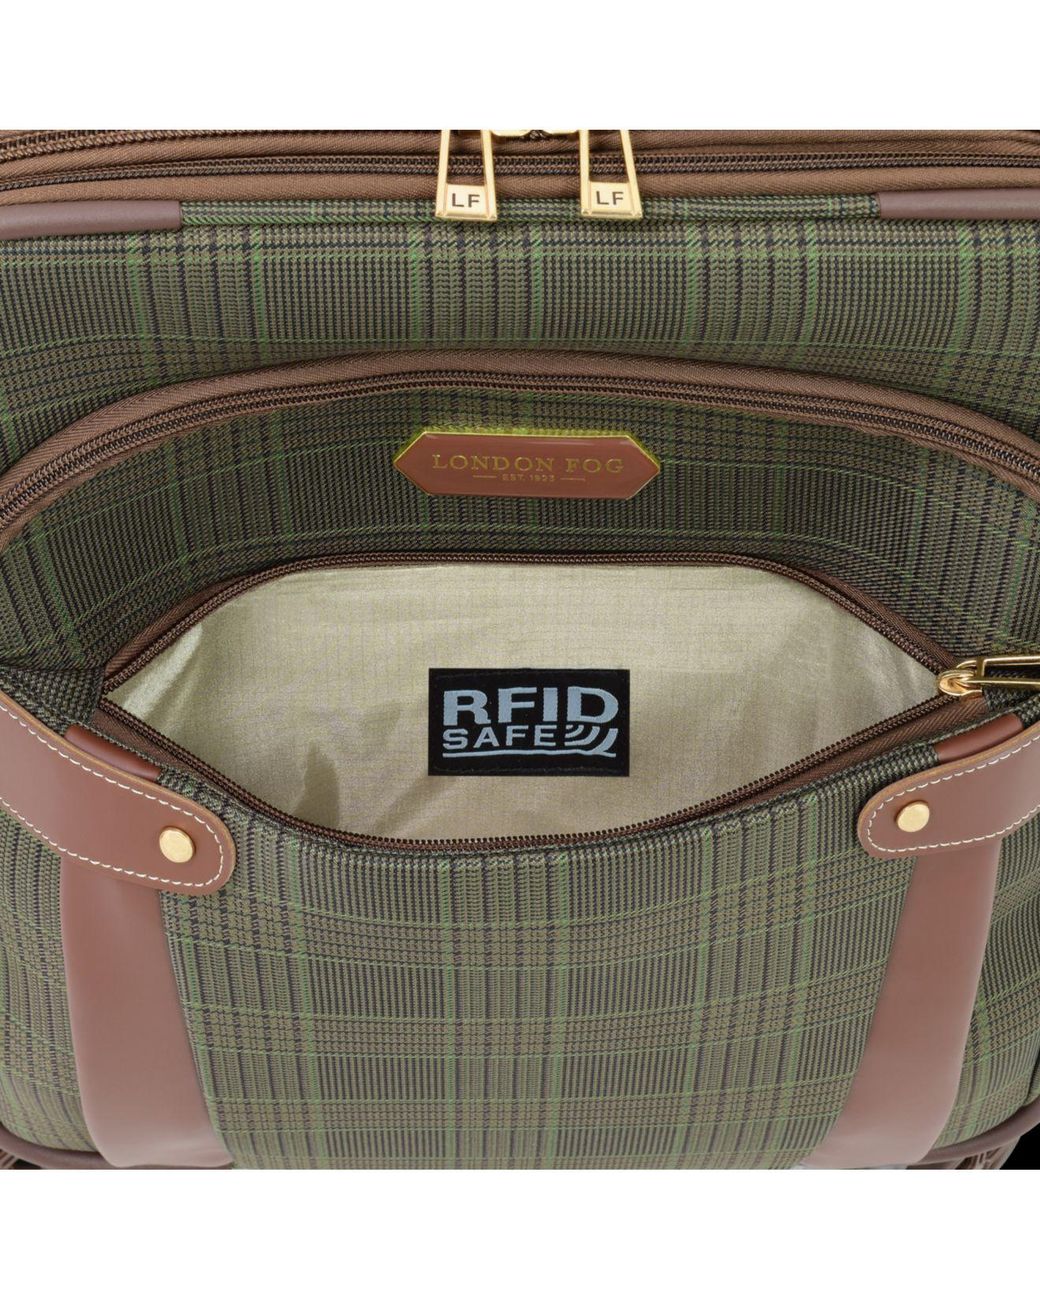 London Fog Purse Vintage Handbags | Mercari